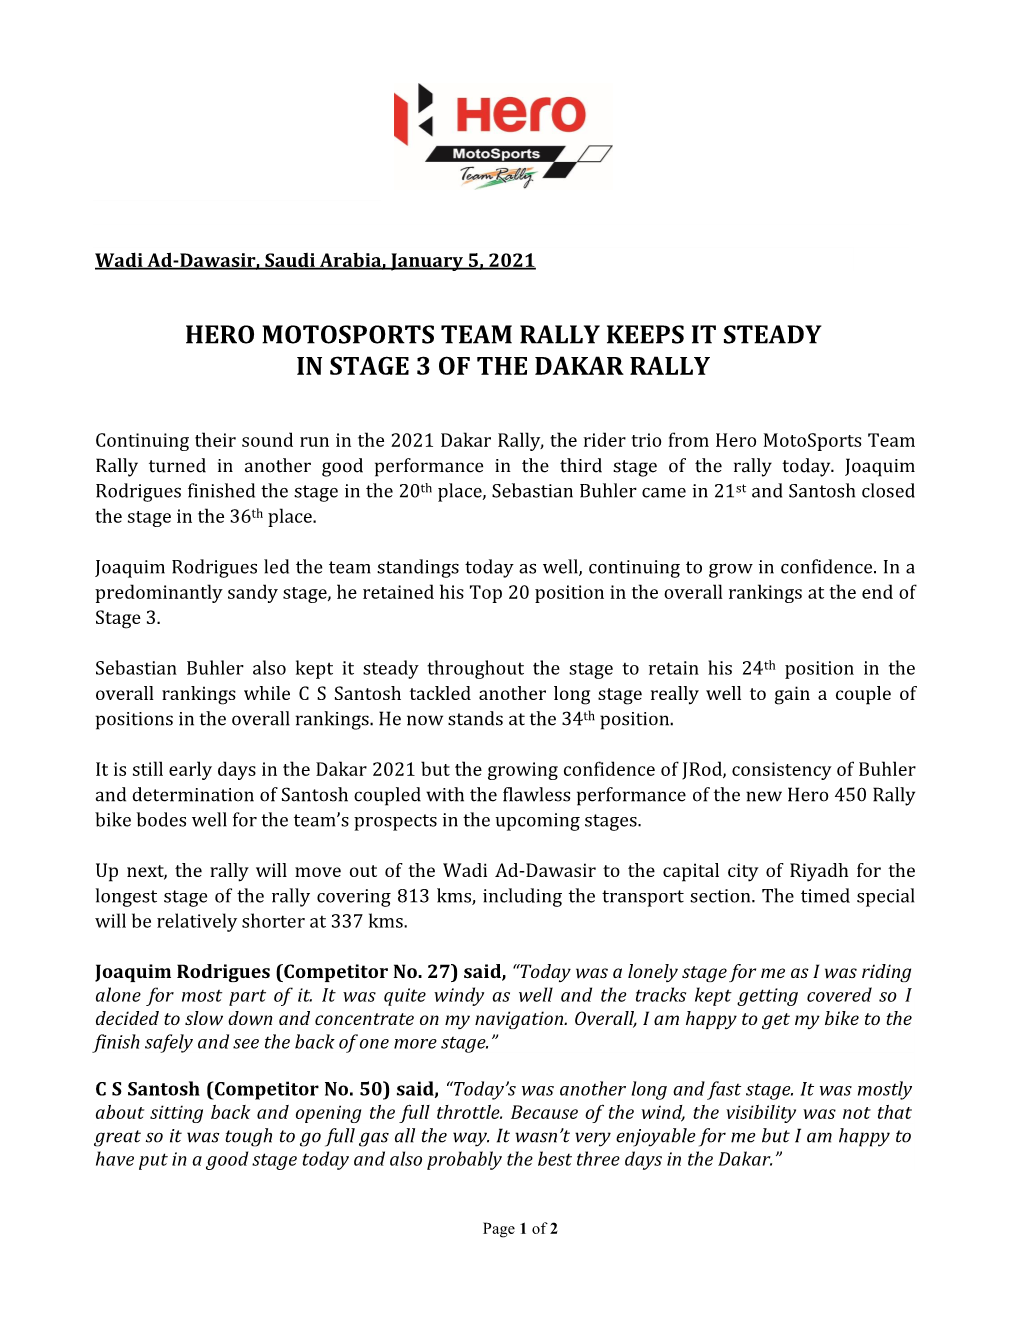 Hero Motosports Team Rally Keeps It Steady in Stage 3 of the Dakar Rally